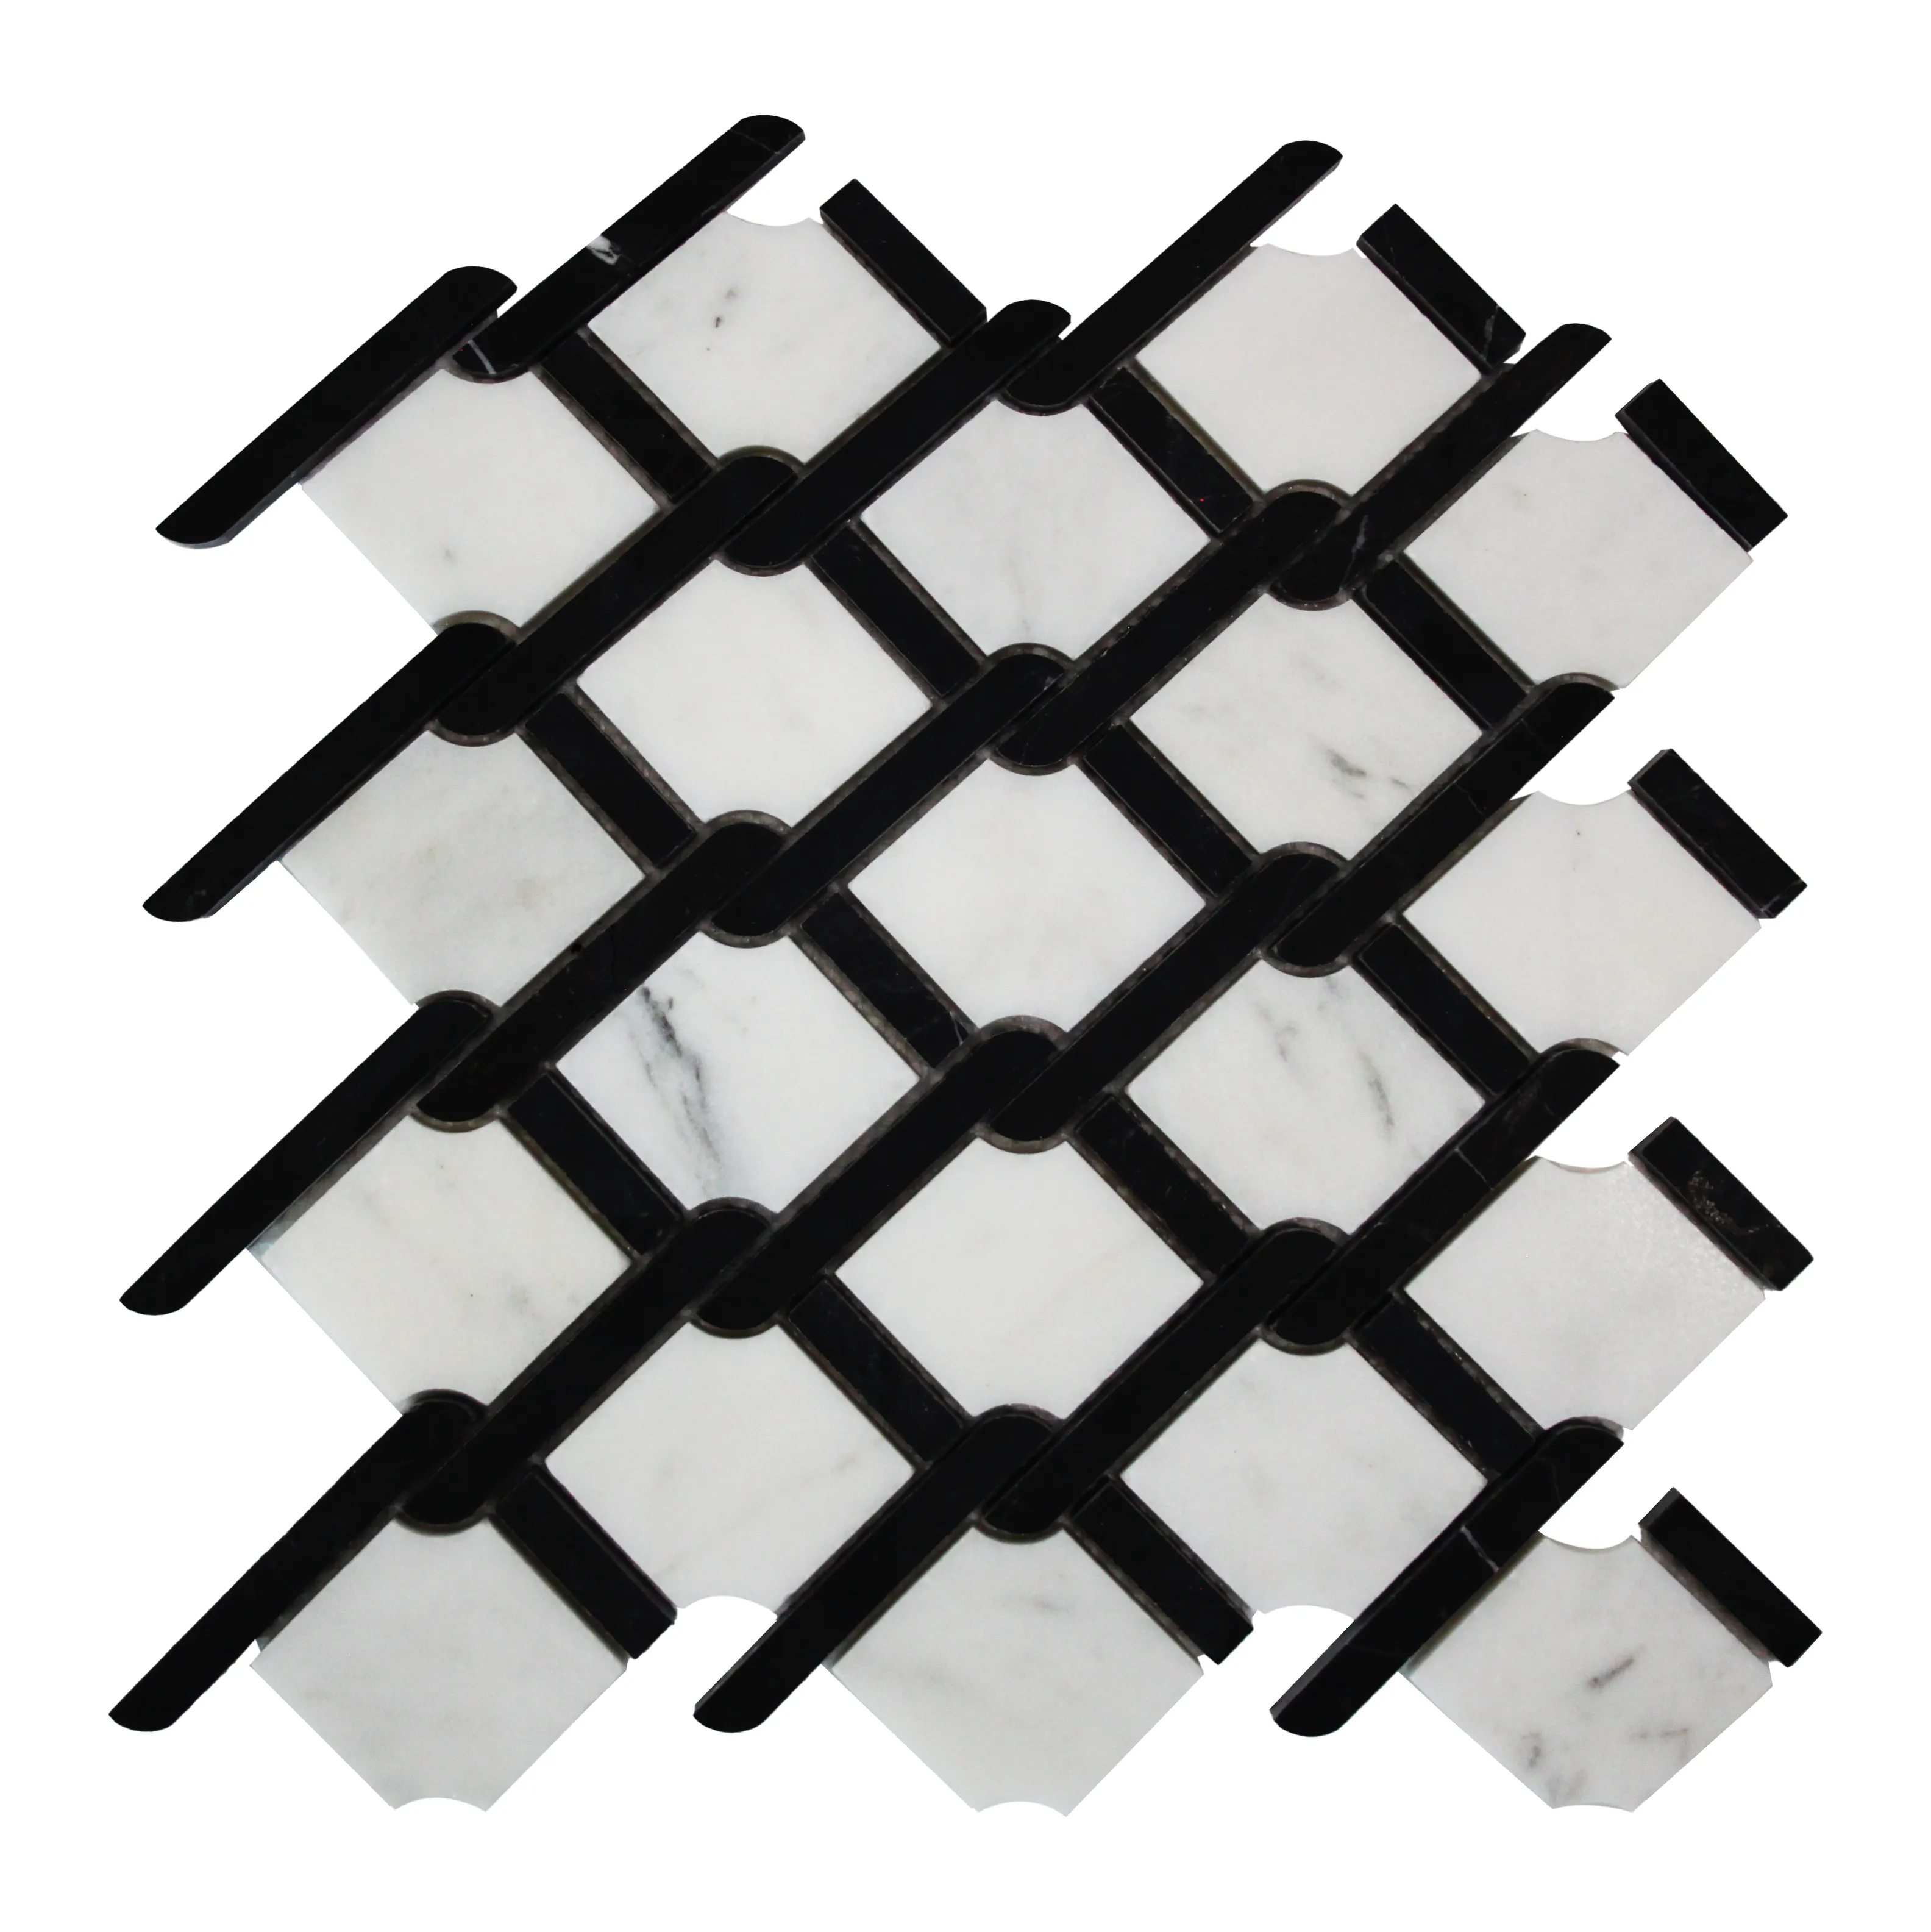 Carrara White Italian Marble Marbella Lynx Rope Design with Nero Marquina Black Strips Mosaic Tile Honed